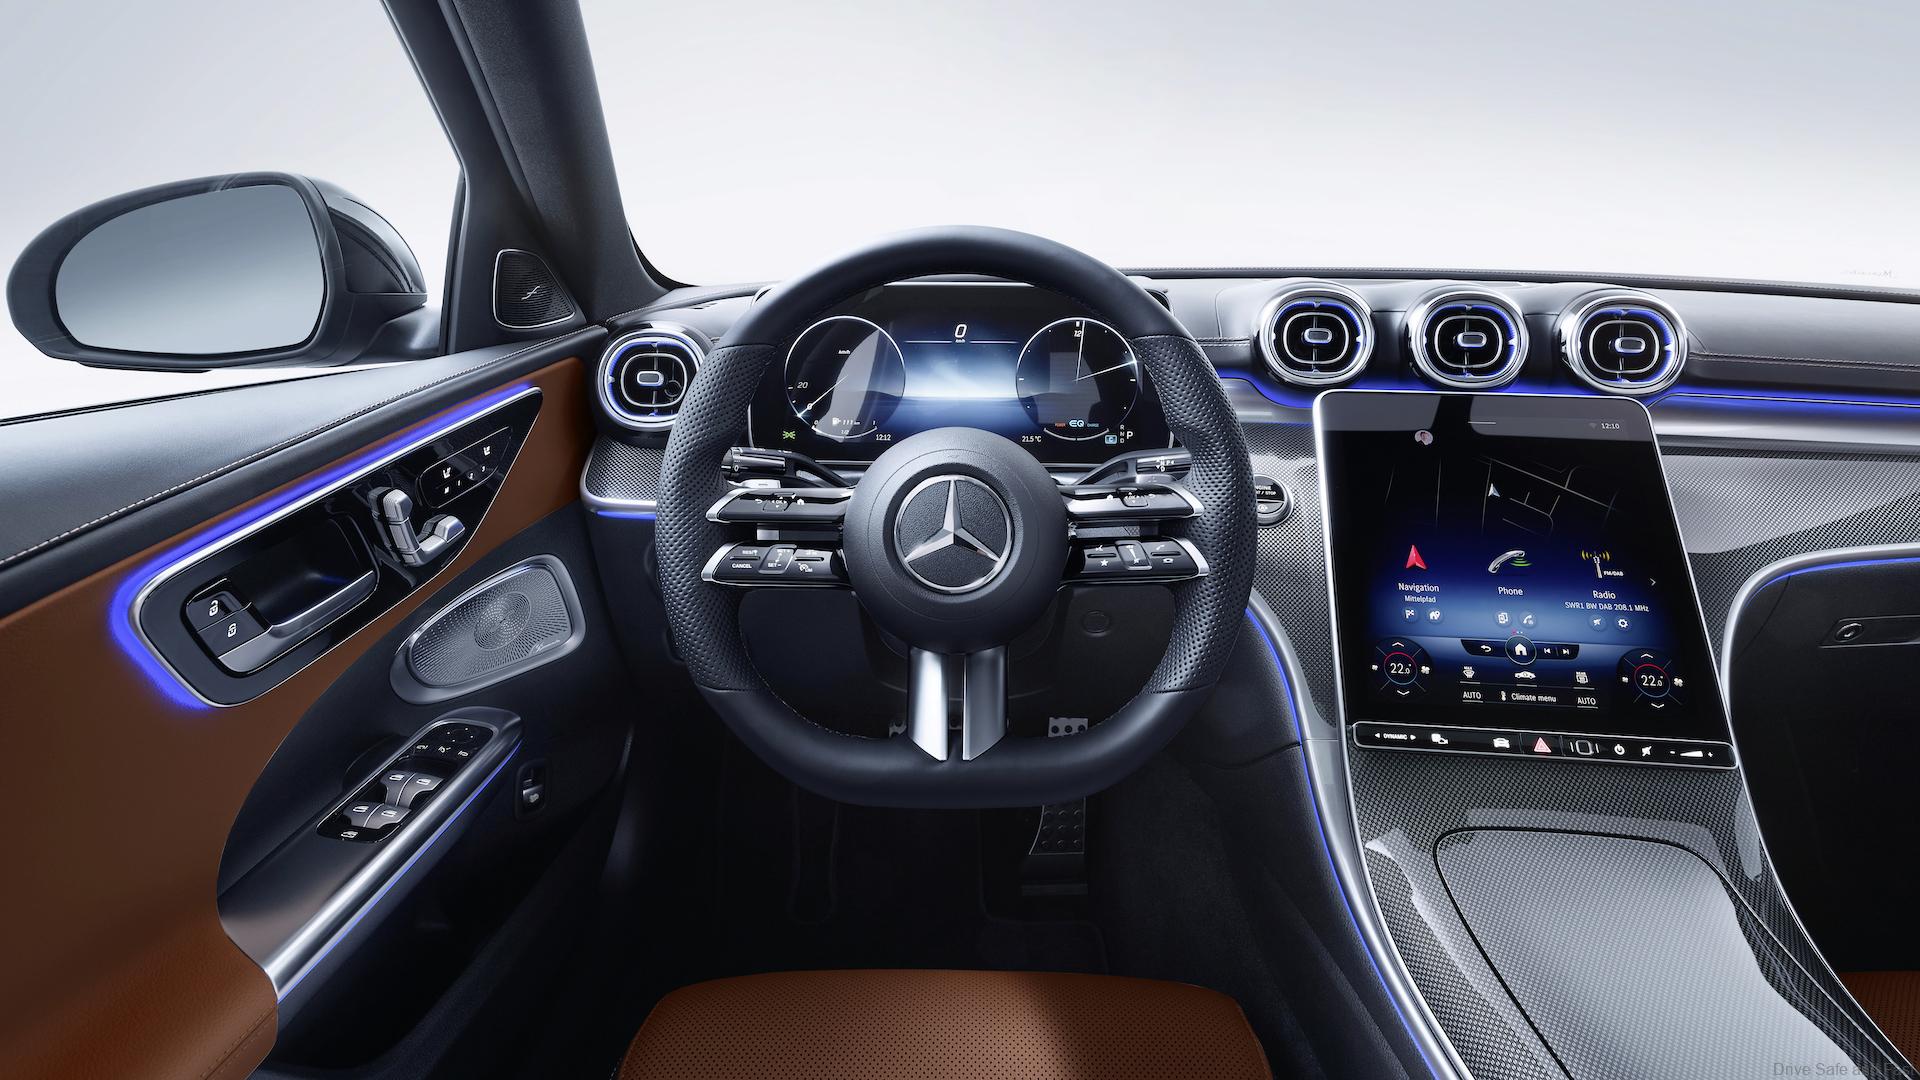 2022 MercedesBenz CClass Debuts, Looks Like a Mini SClass